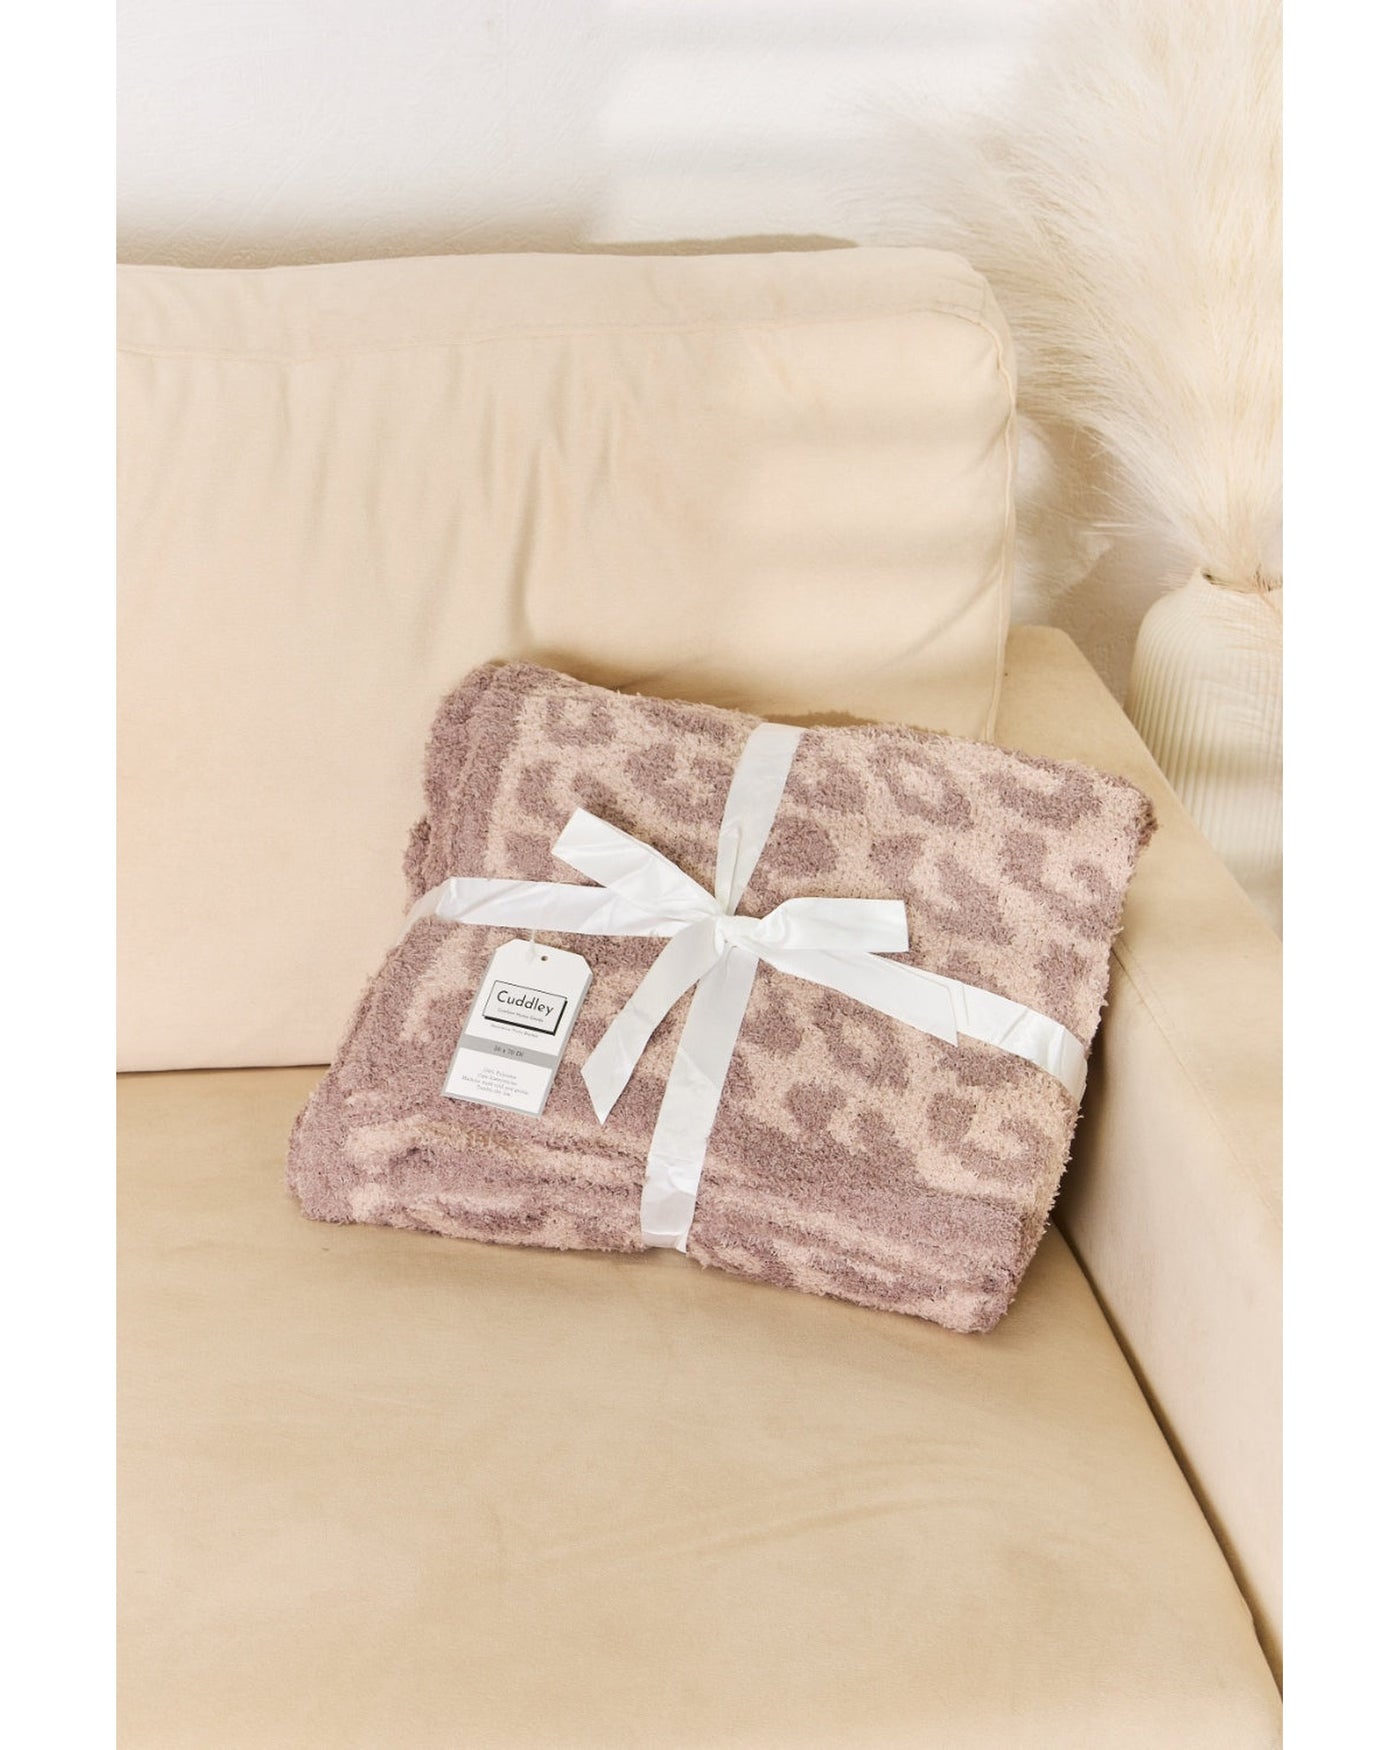 Cuddley Leopard Decorative Throw Blanket